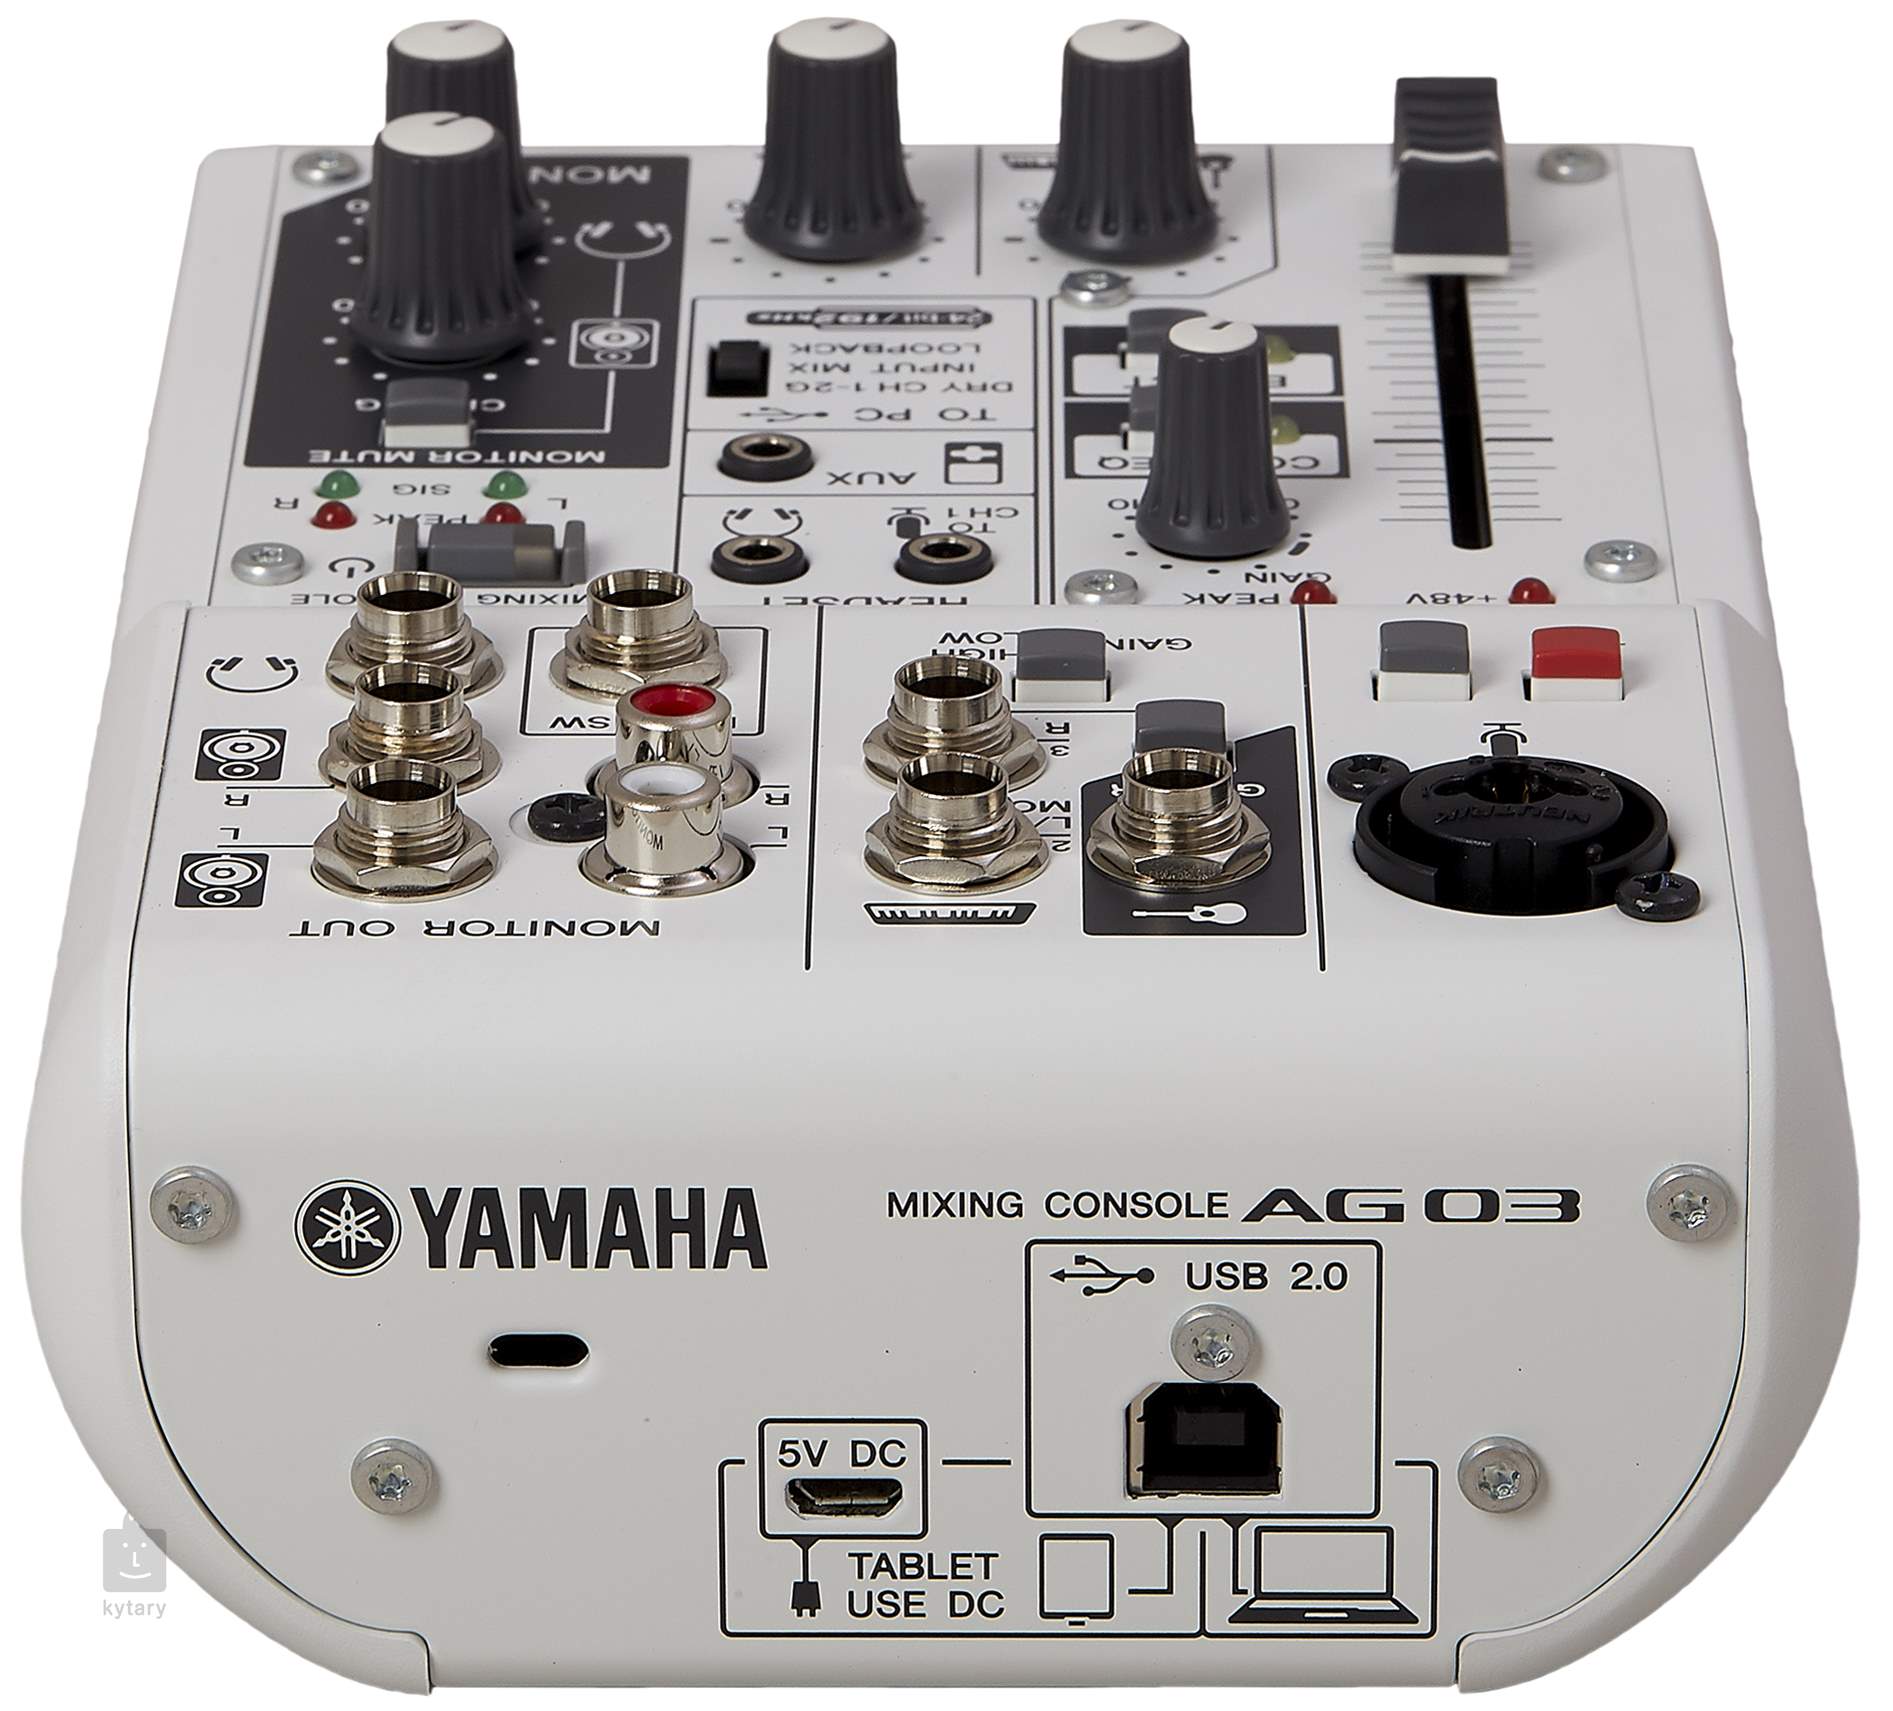 YAMAHA AG03 (opened) USB Audio Interface | Kytary.ie